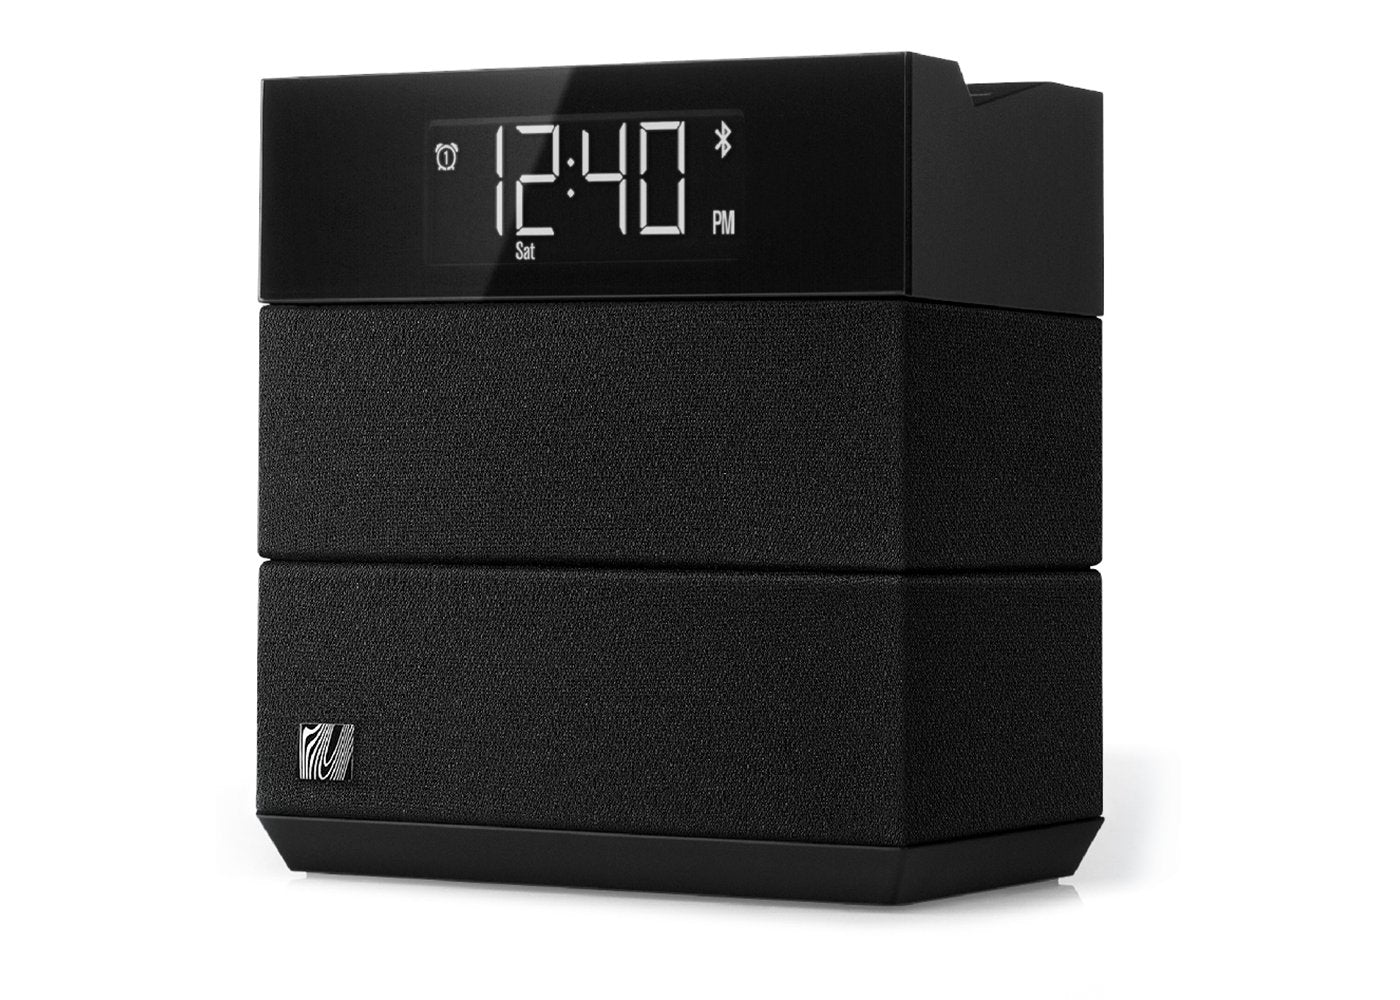 Teleadapt TA-08H-BK SoundRise Speaker Alarm Clock with 2 USB, Bluetooth, 1-Year Warranty